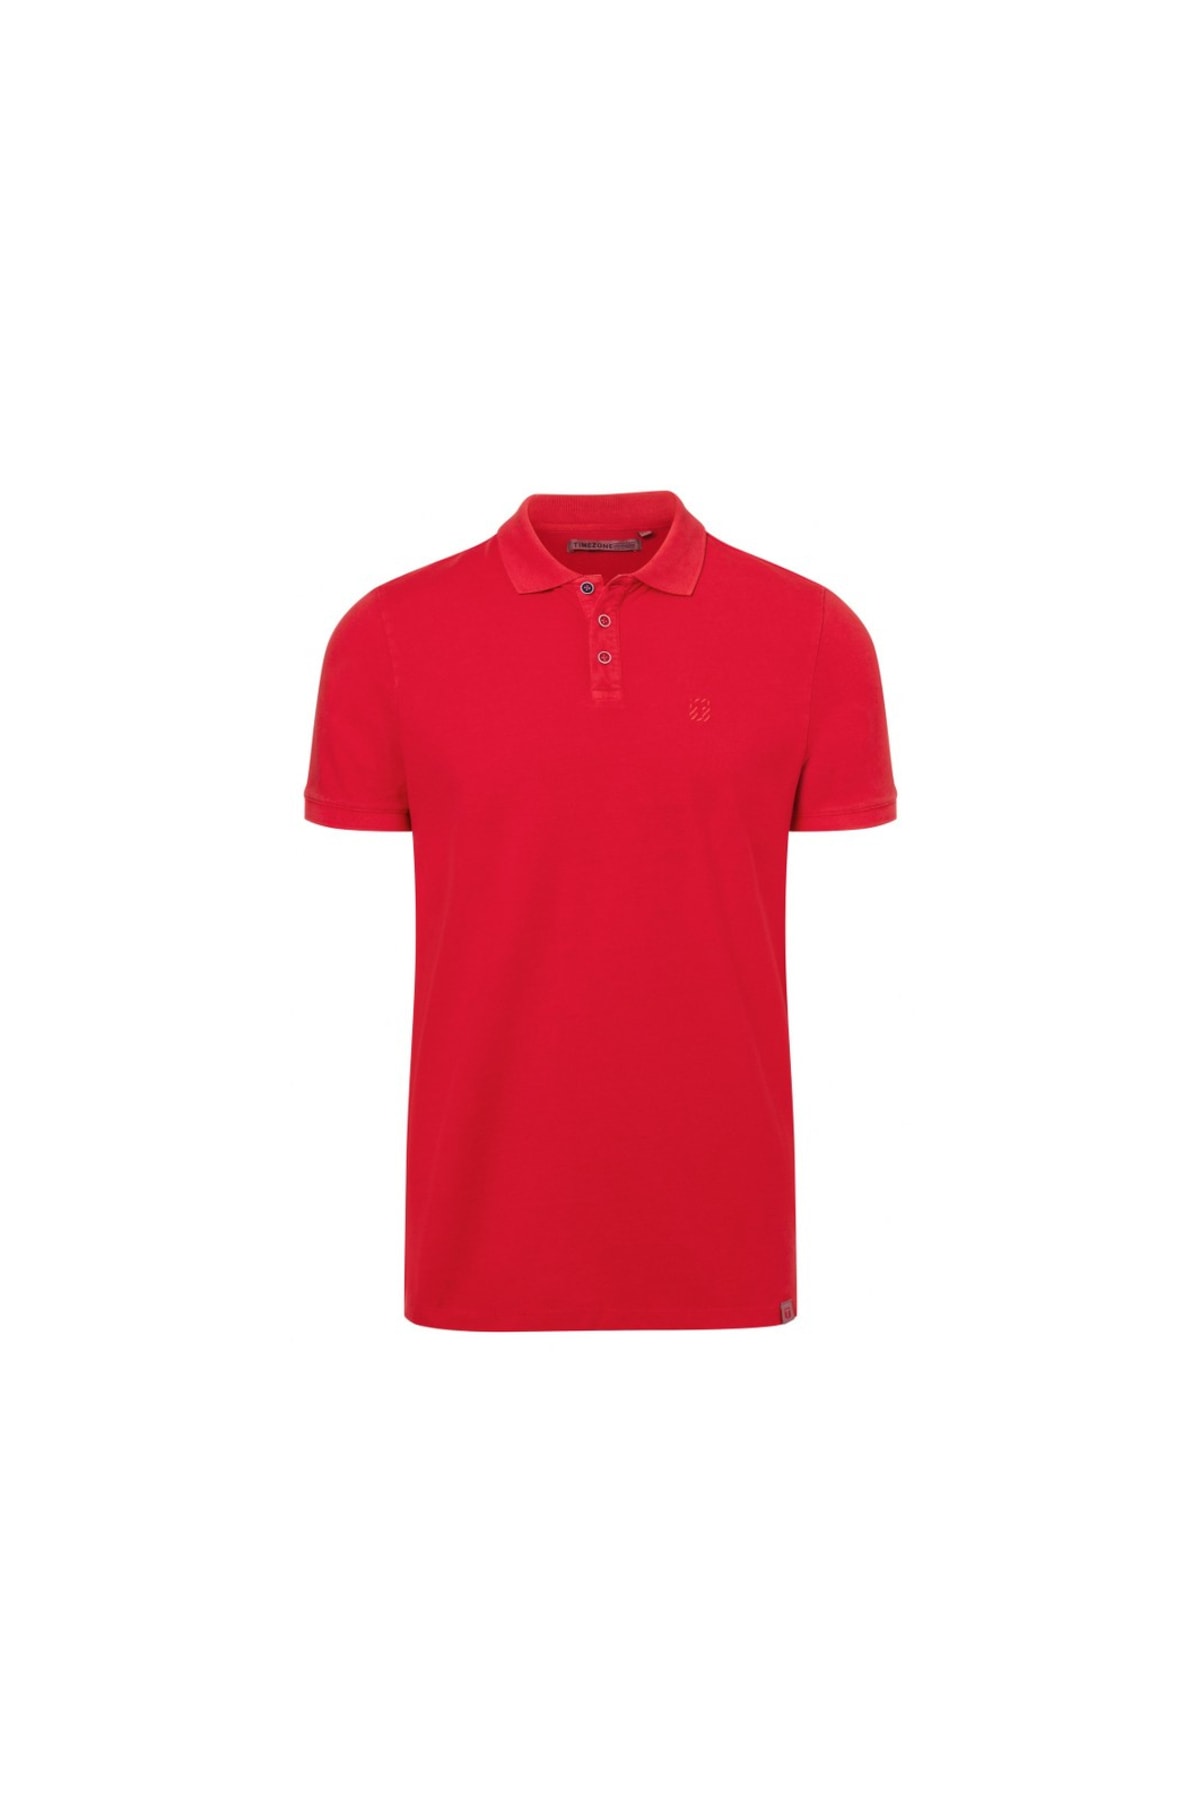 Timezone Hemd Rot Regular Fit Fast ausverkauft